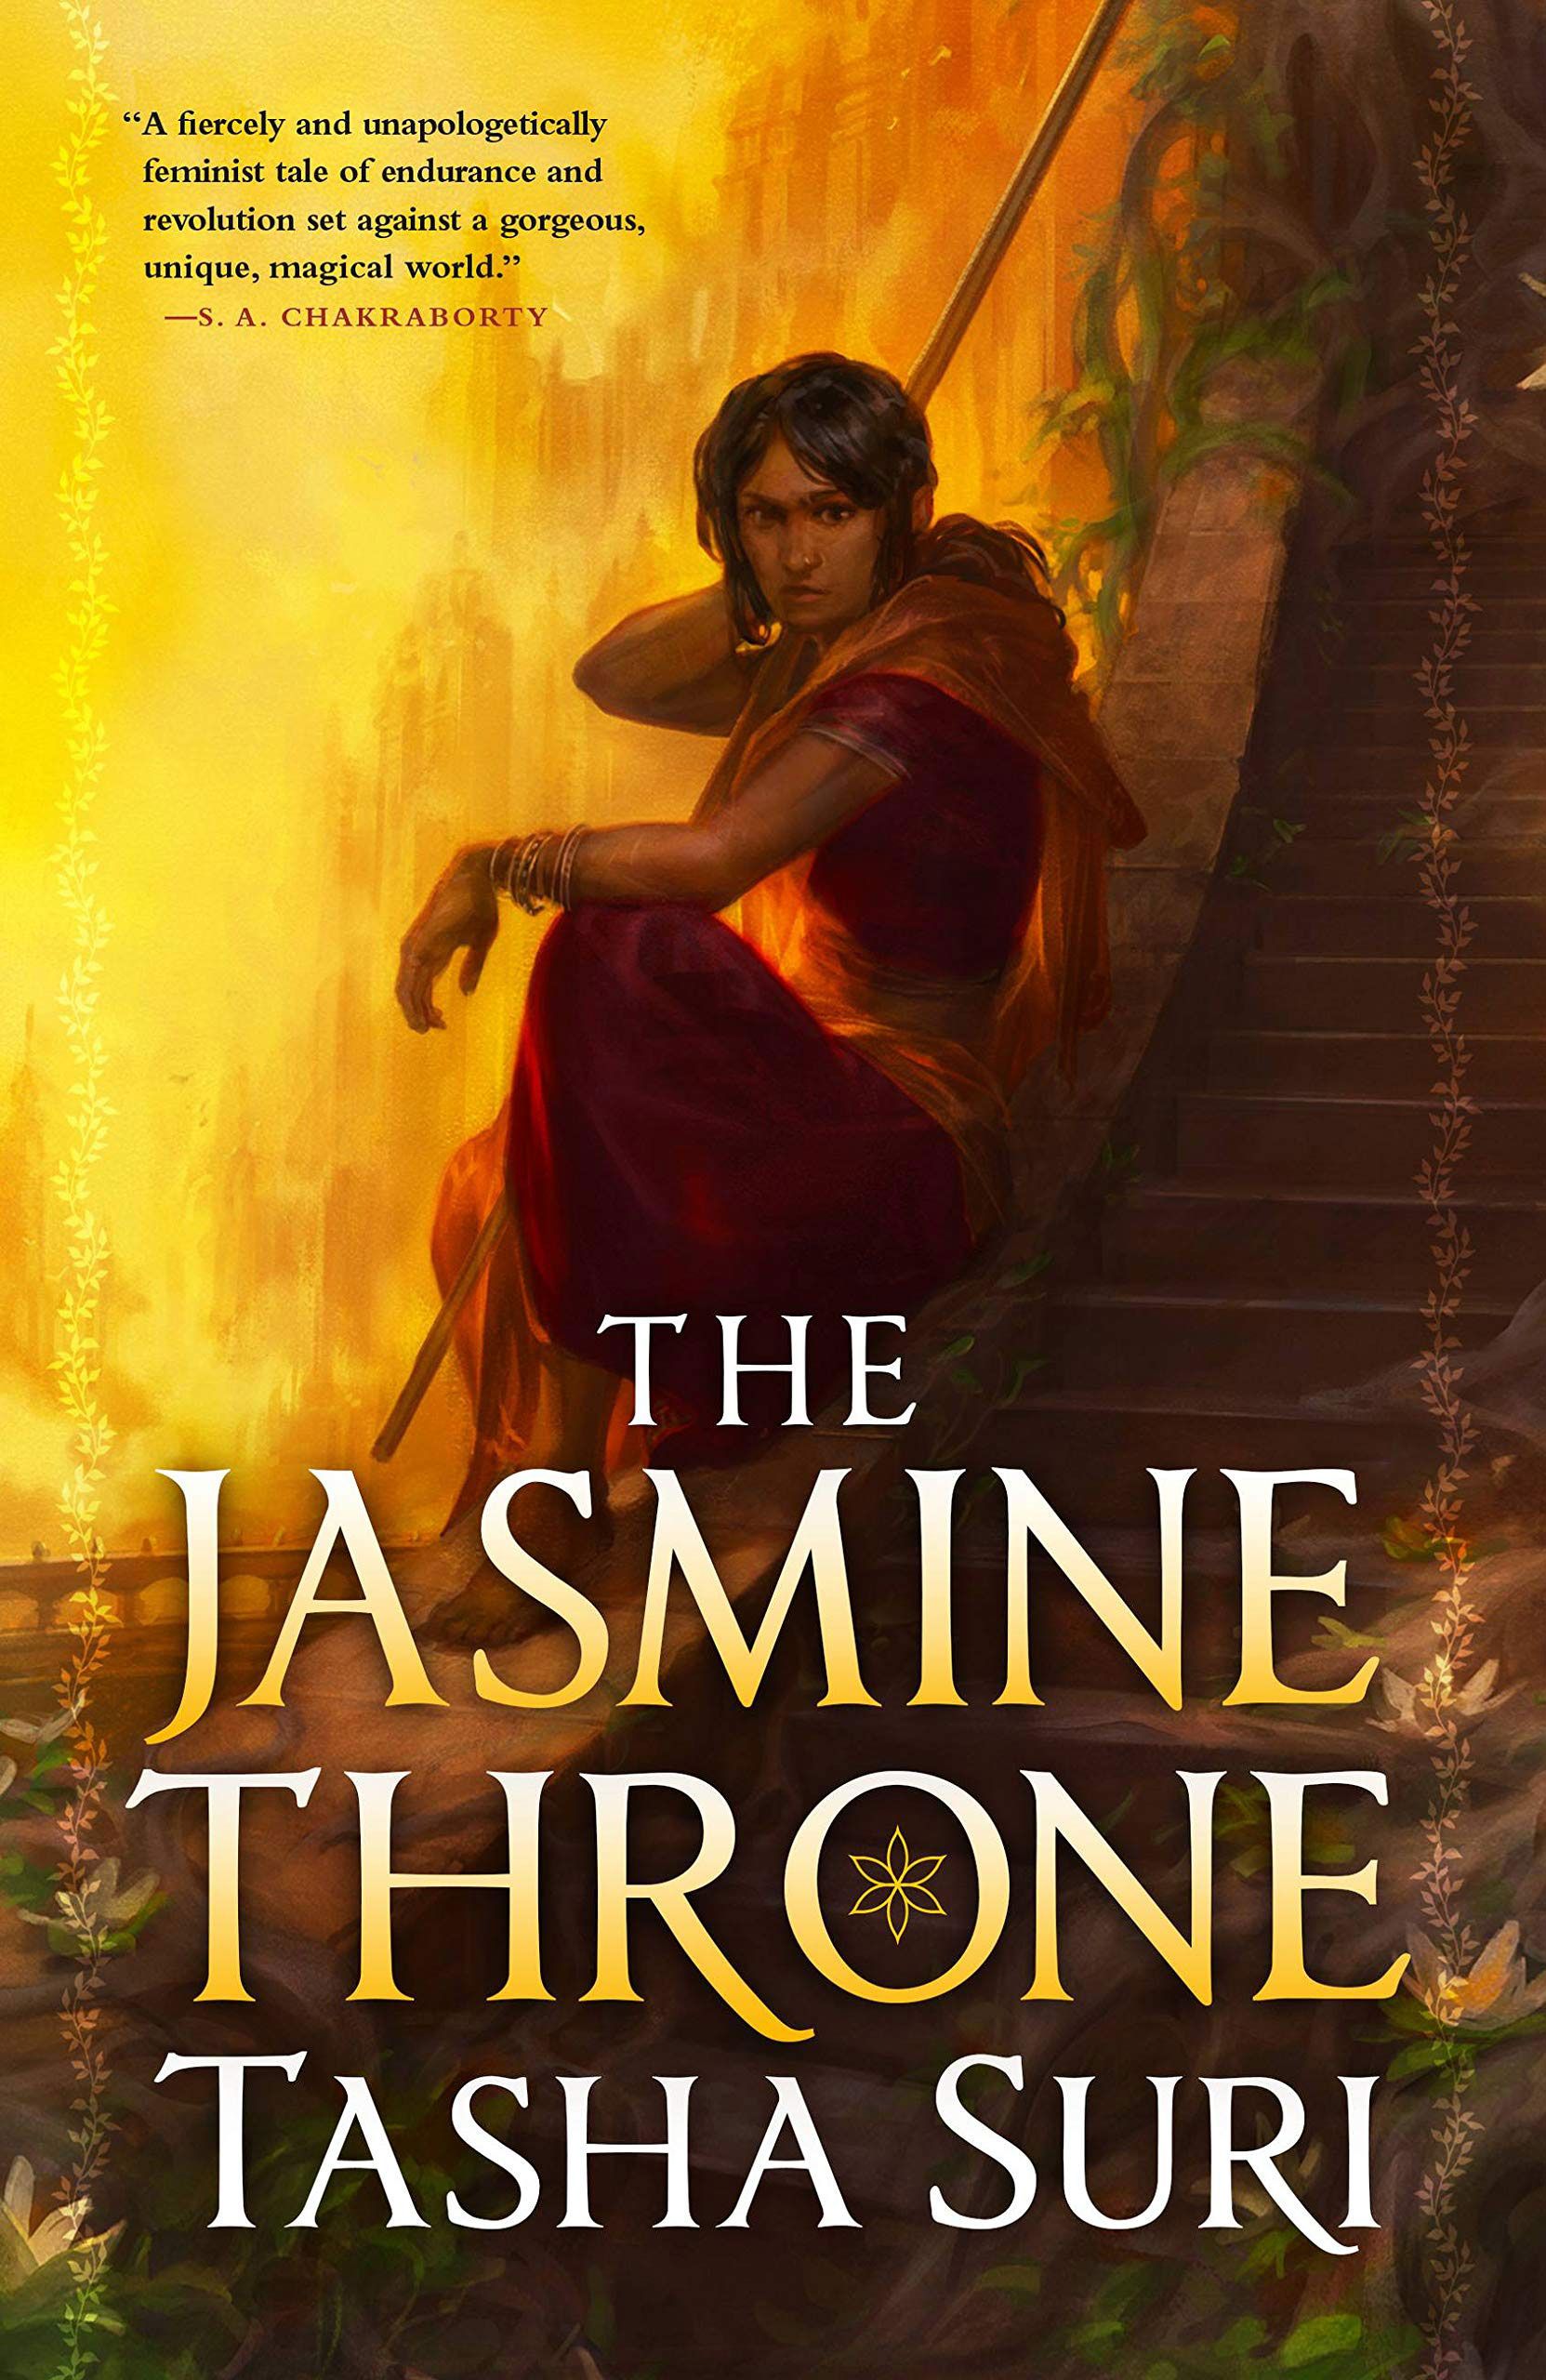 https://pyxis.nymag.com/v1/imgs/bc4/7af/010ec75b66466fba23029de518bb23a0b6-The-Jasmine-Throne.jpg